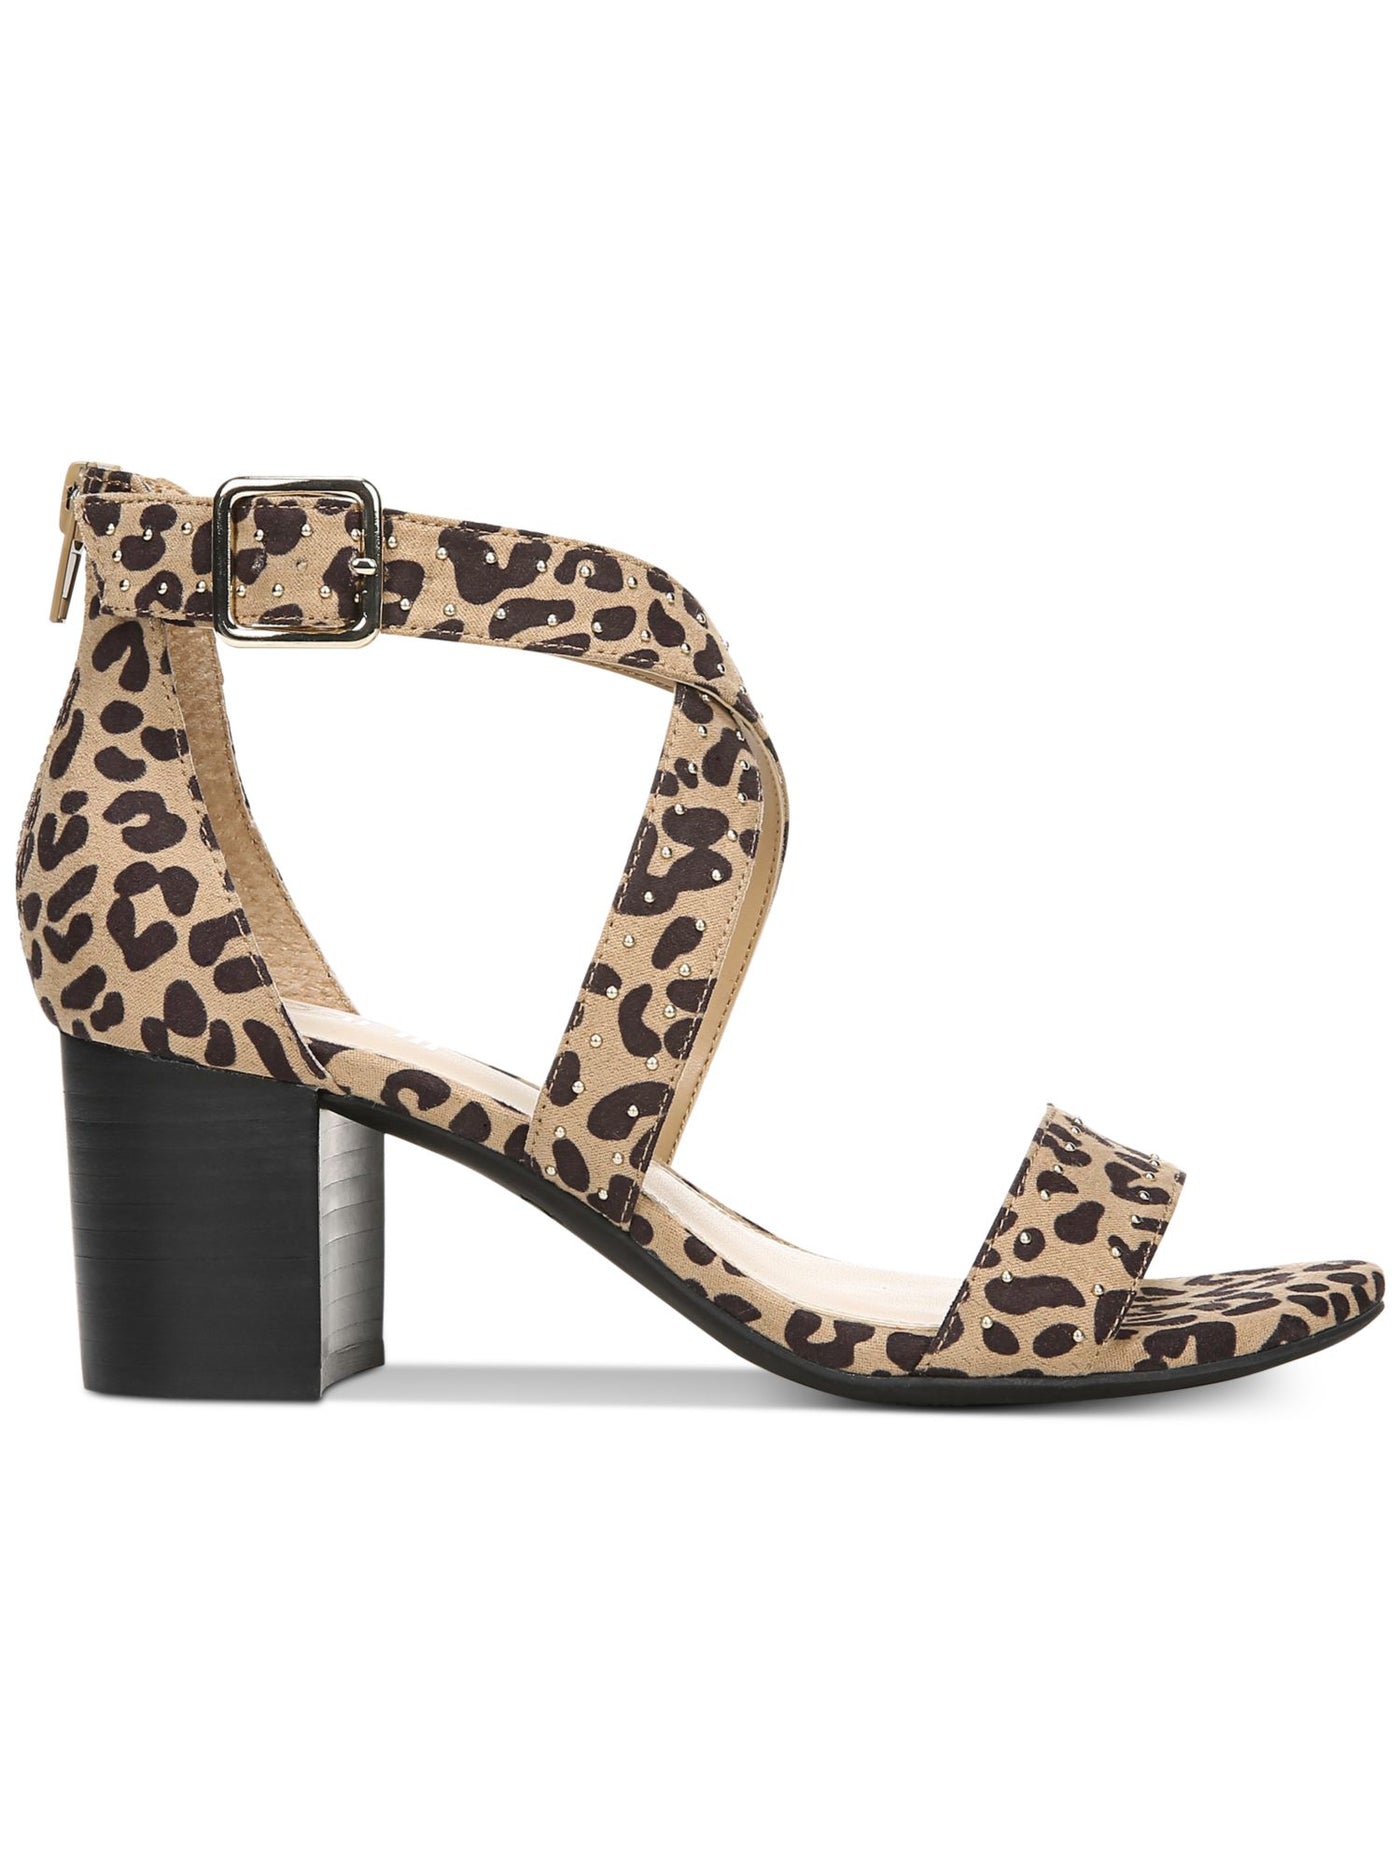 BAR III Womens Beige Leopard Print Strappy Zip Studded Padded Baylee Round Toe Block Heel Buckle Dress Sandals Shoes 5 M